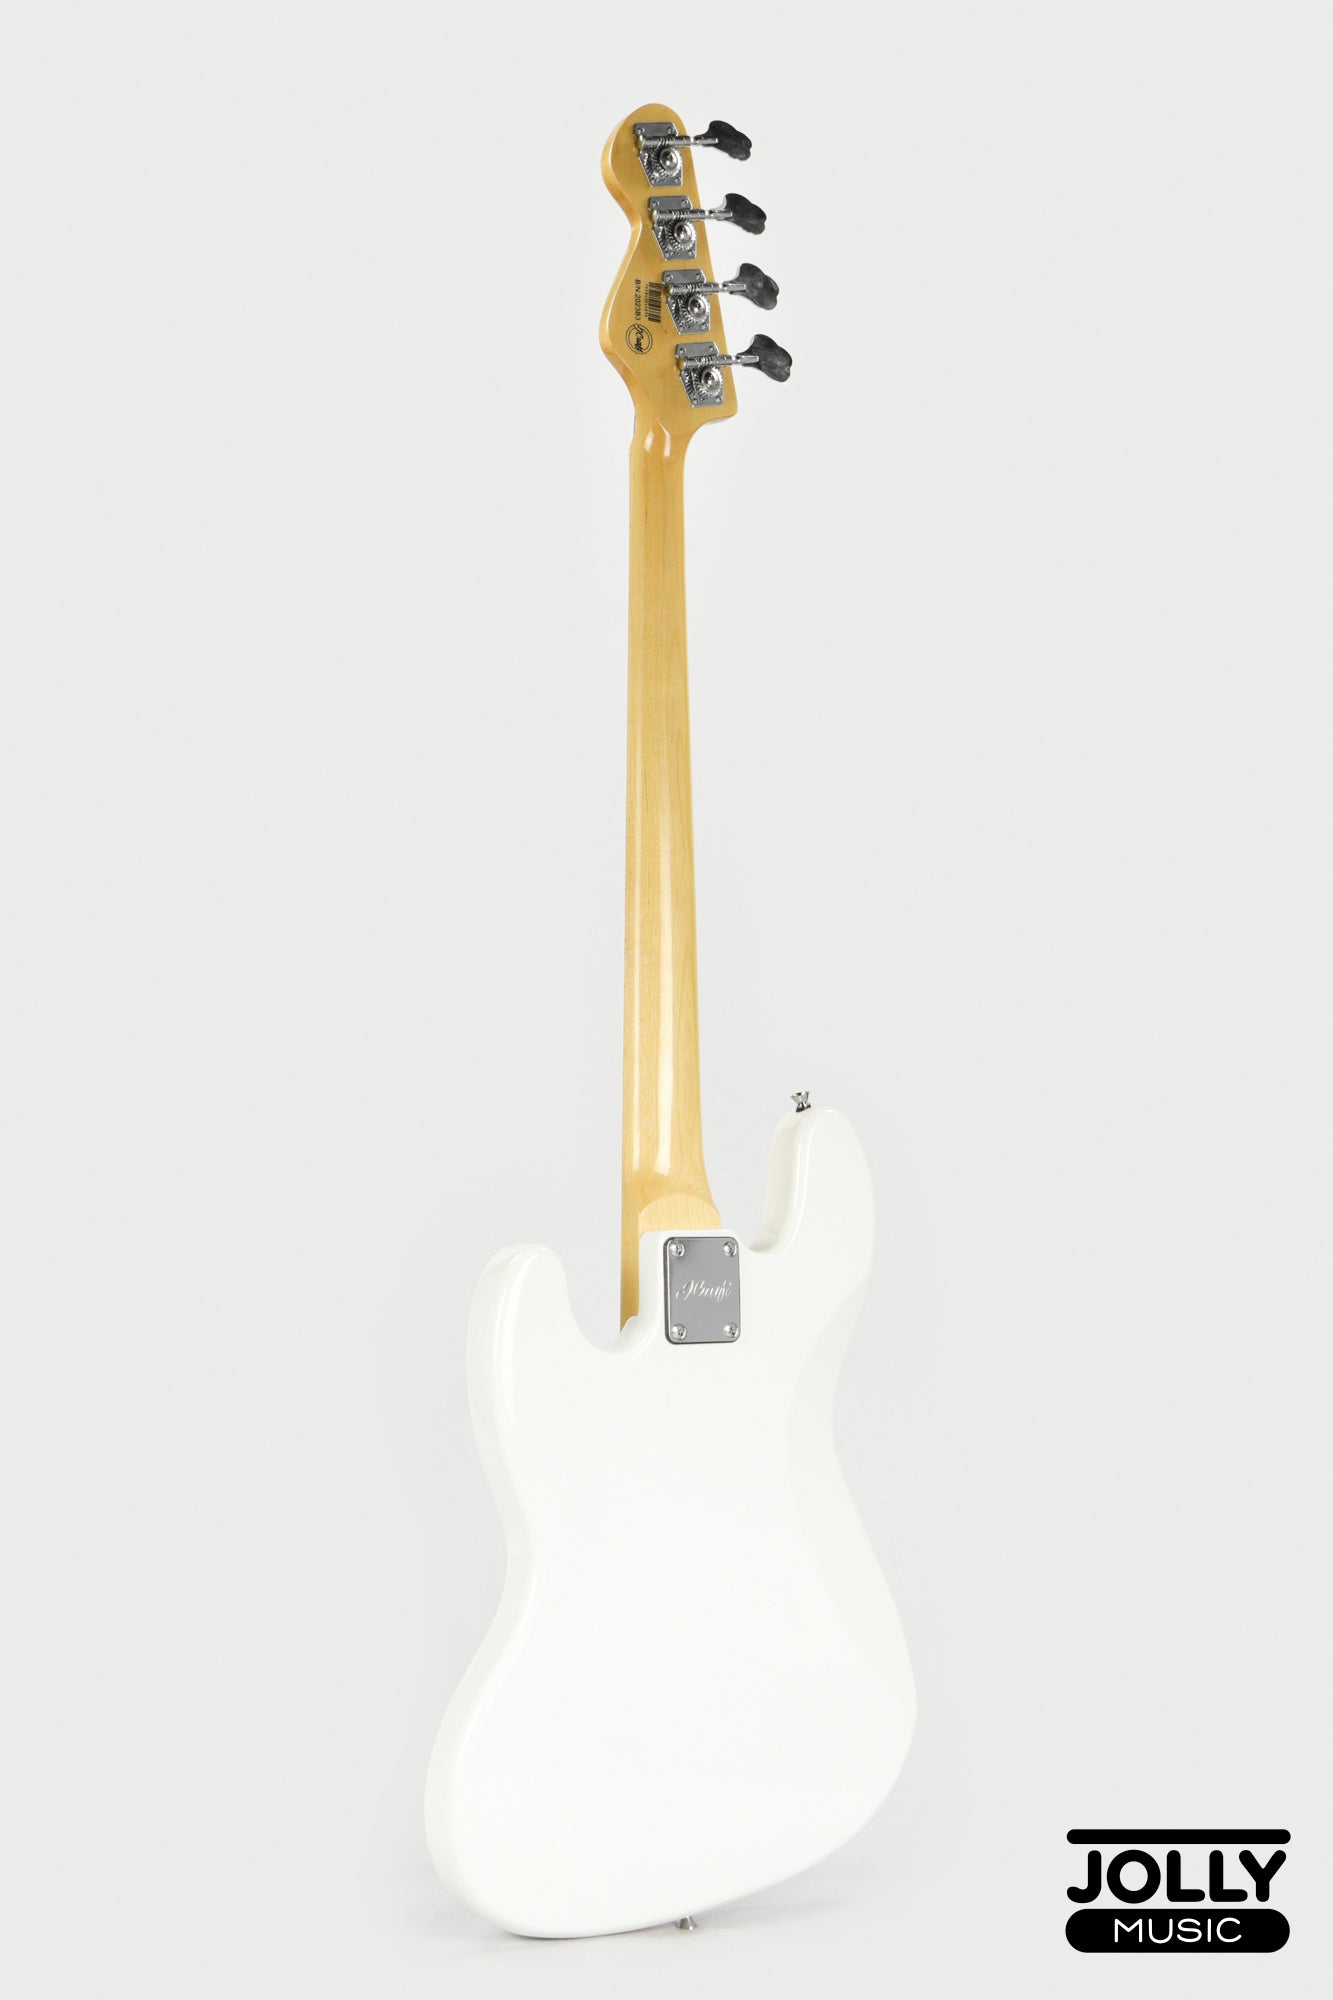 JCraft JB-1 J-Offset 4-String Bass Guitar with Gigbag - White